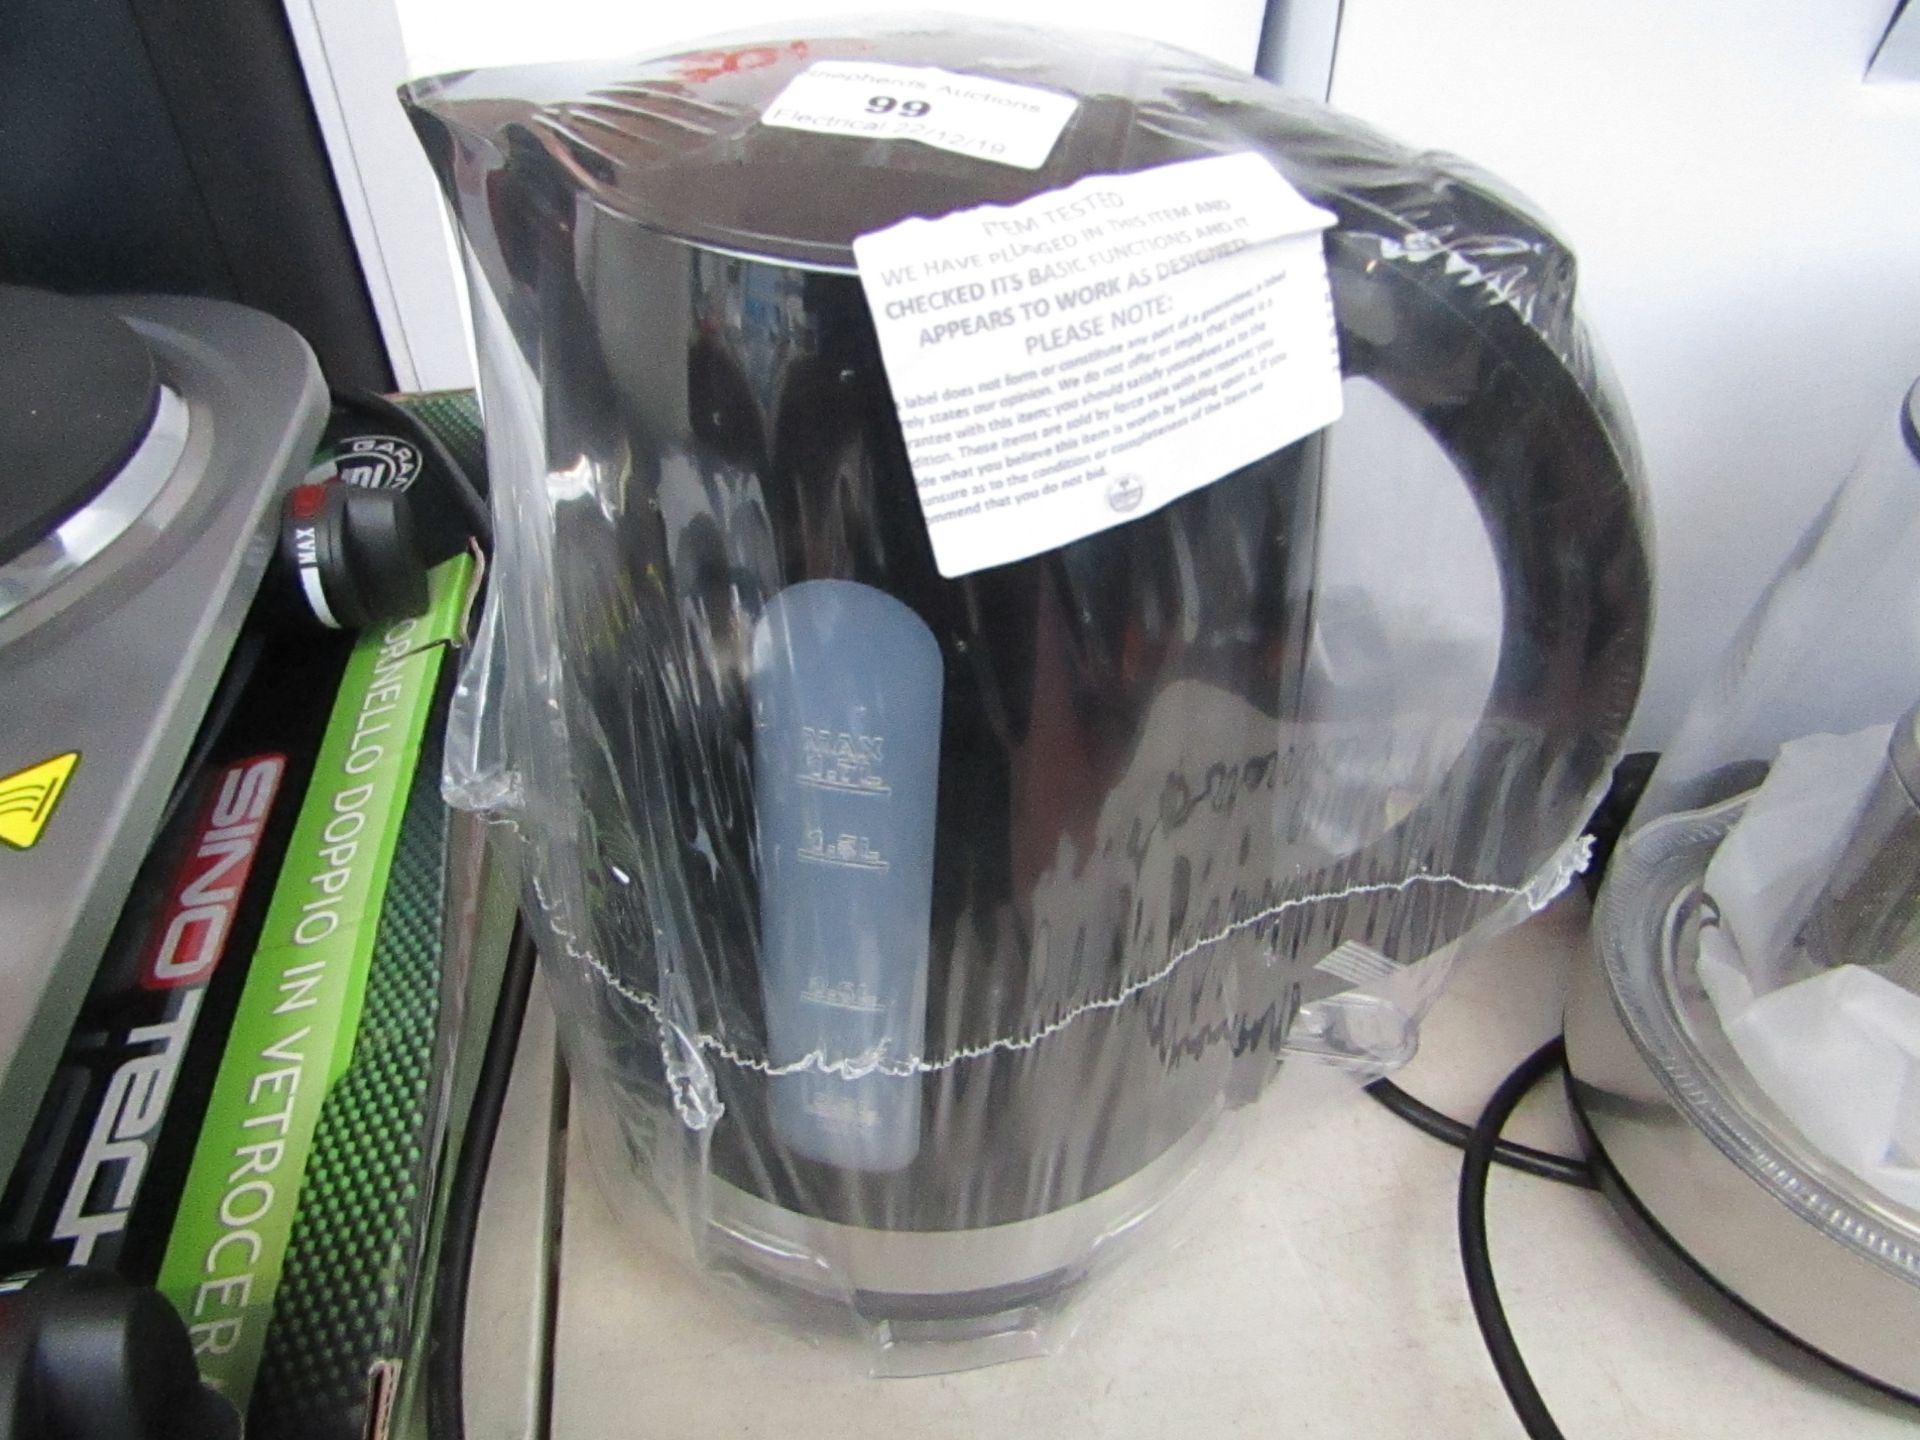 Electric kettle - KE01301Y-GS (Black) Brand new in original packaging and boxed.